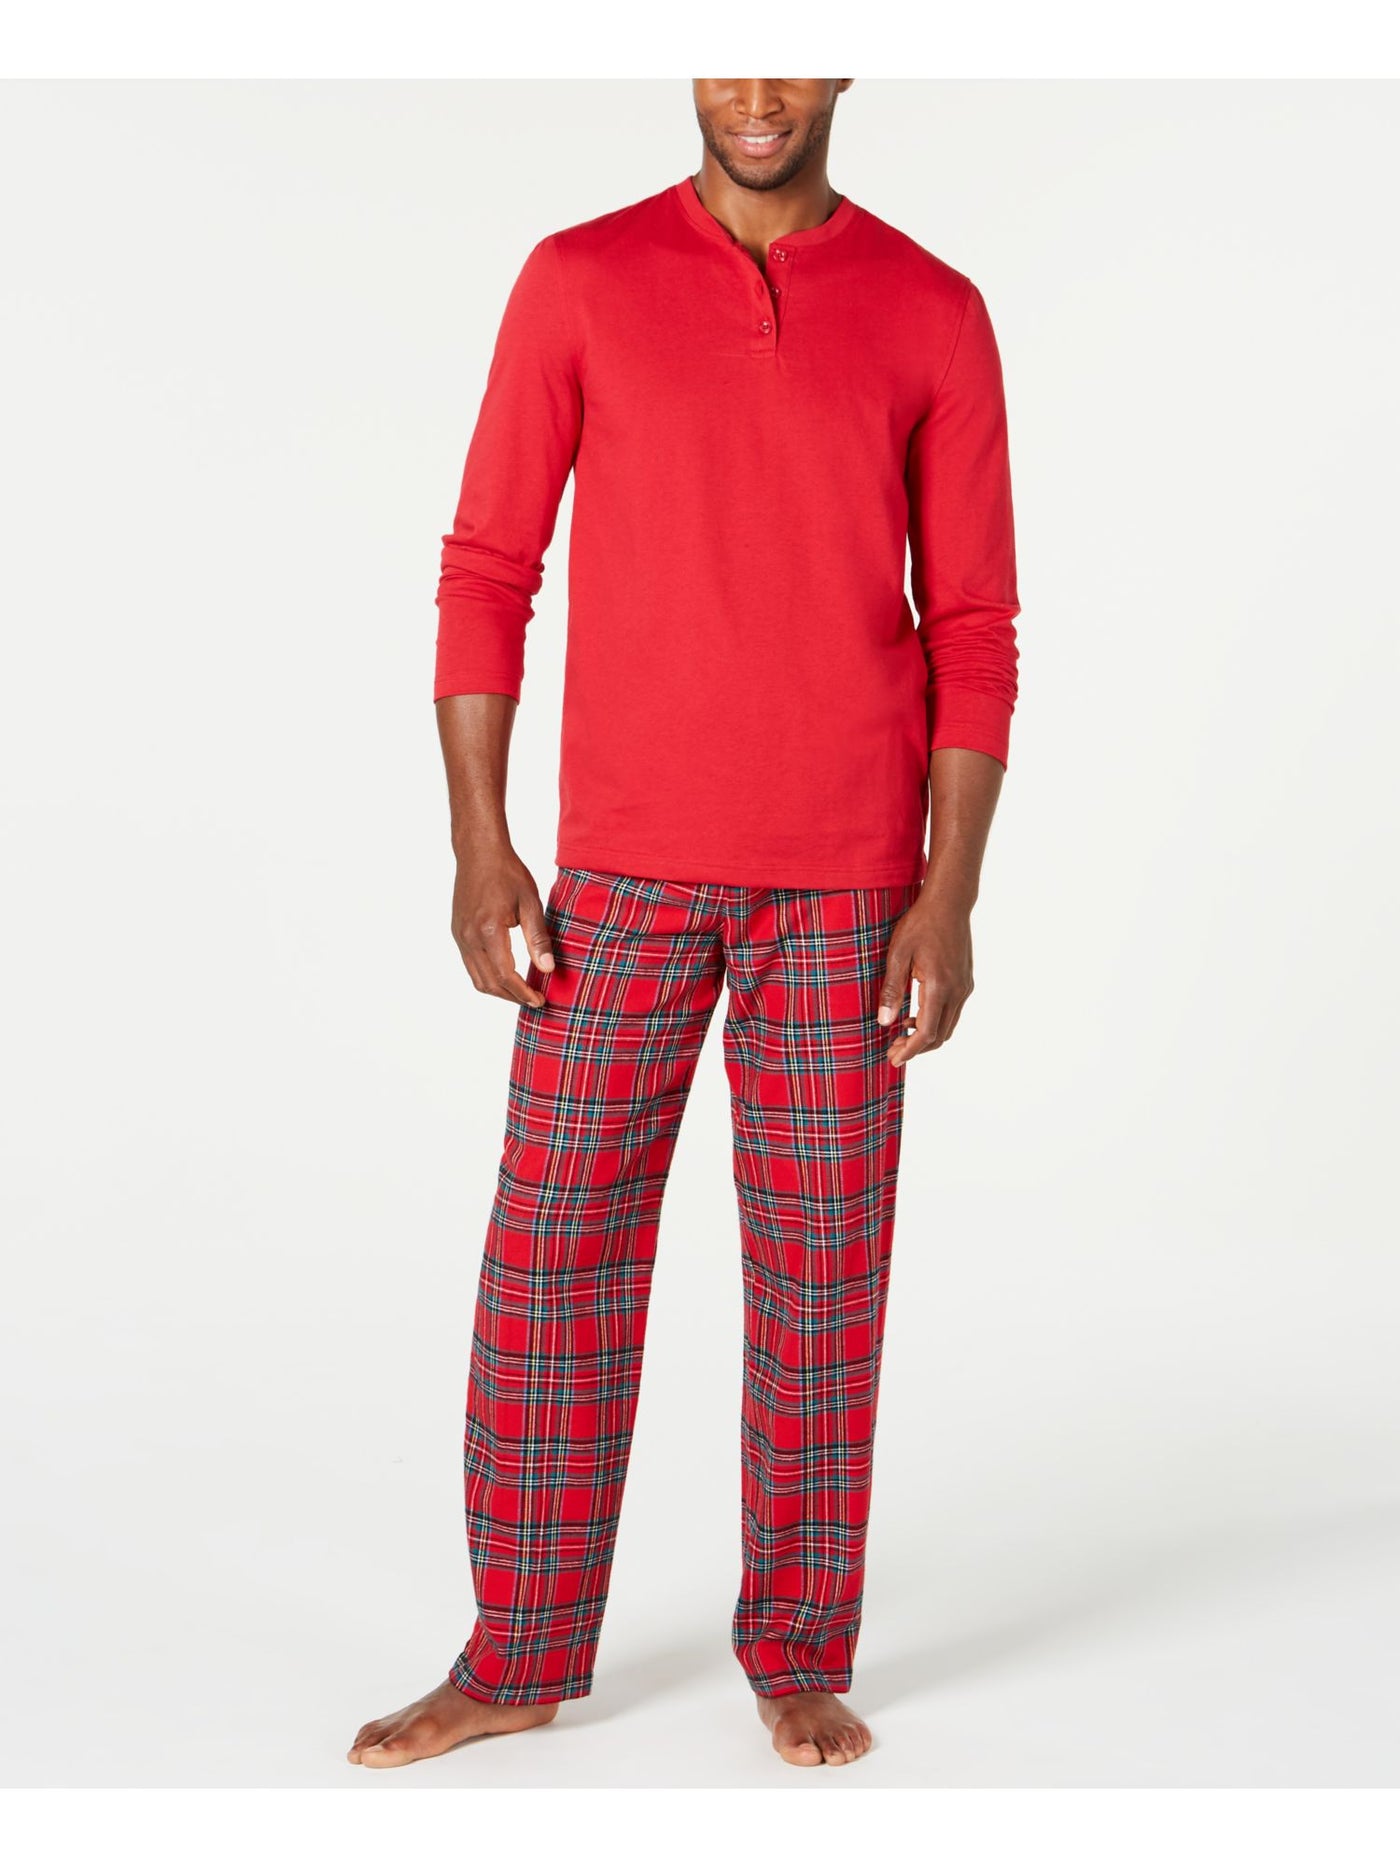 FAMILY PJs Mens Red Elastic Band Long Sleeve T-Shirt Top Straight leg Pants Pajamas XL